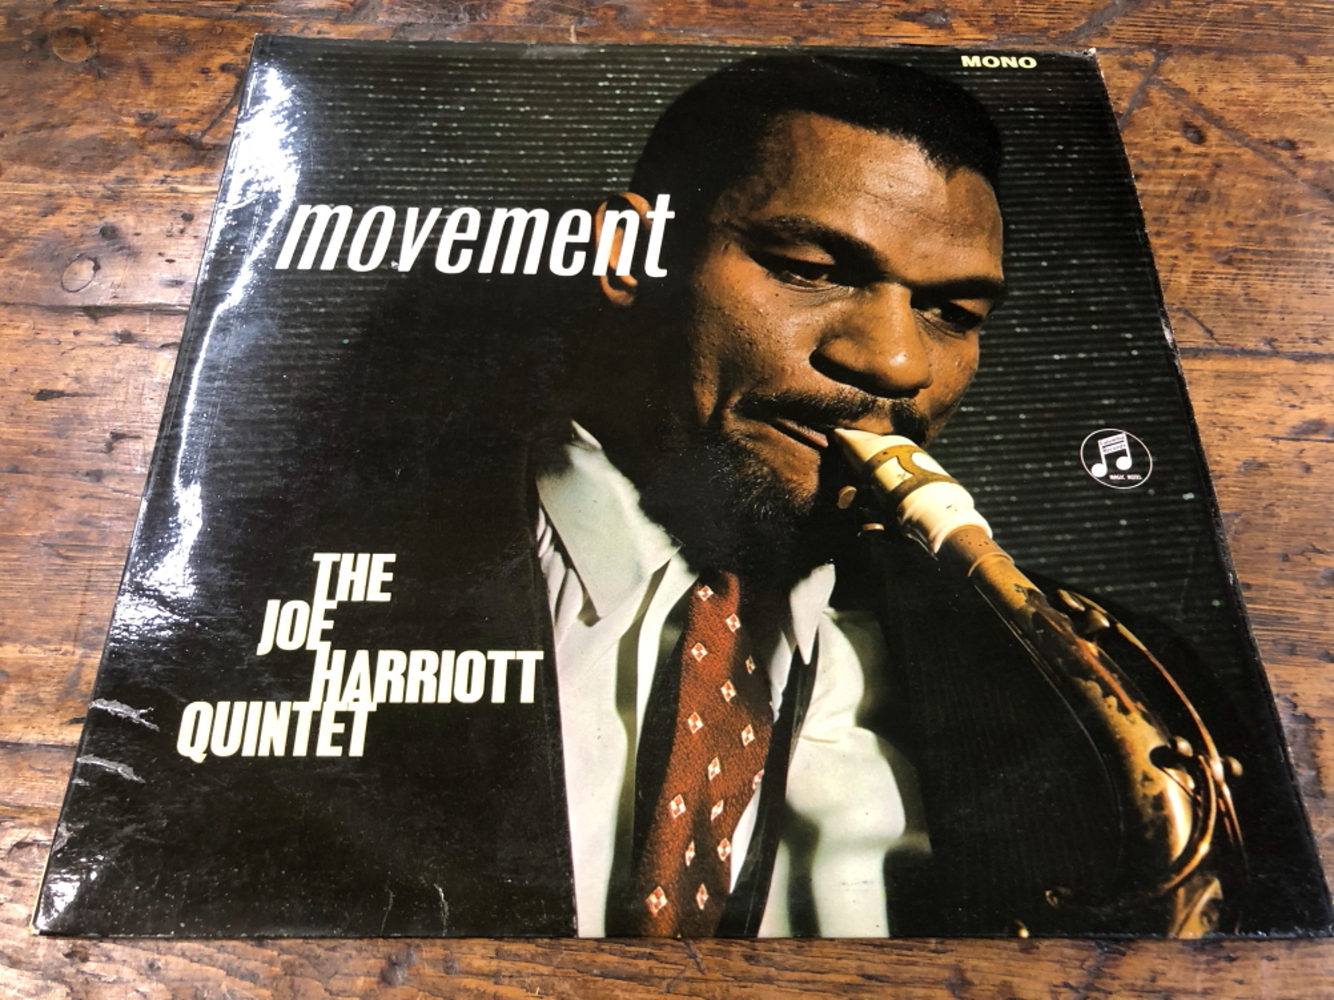 THE JOE HARRIOTT QUINTET - MOVEMENT LP 1964 MONO 1ST PRESSING COLUMBIA 33SX 1627 FRONT LAMINATED - Image 2 of 5